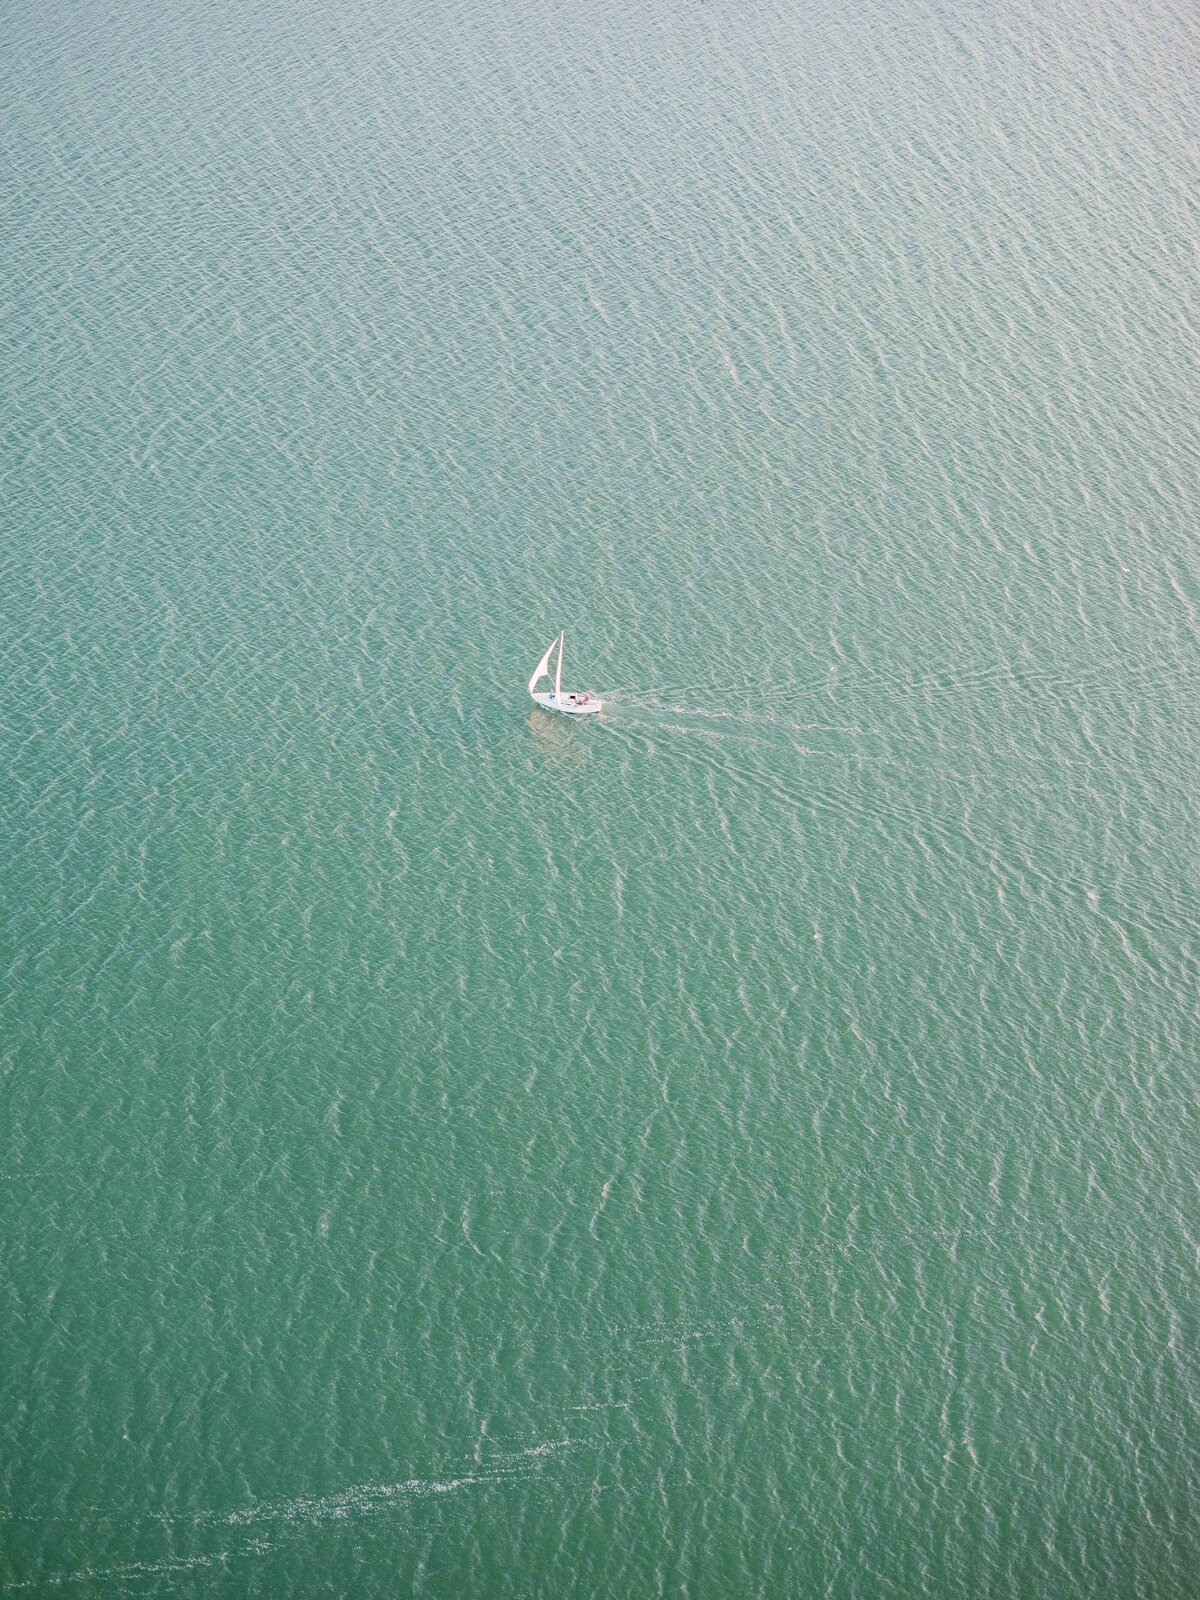 JennySoiPhotography-OPDAirUnit-216-travel-sealife-boating